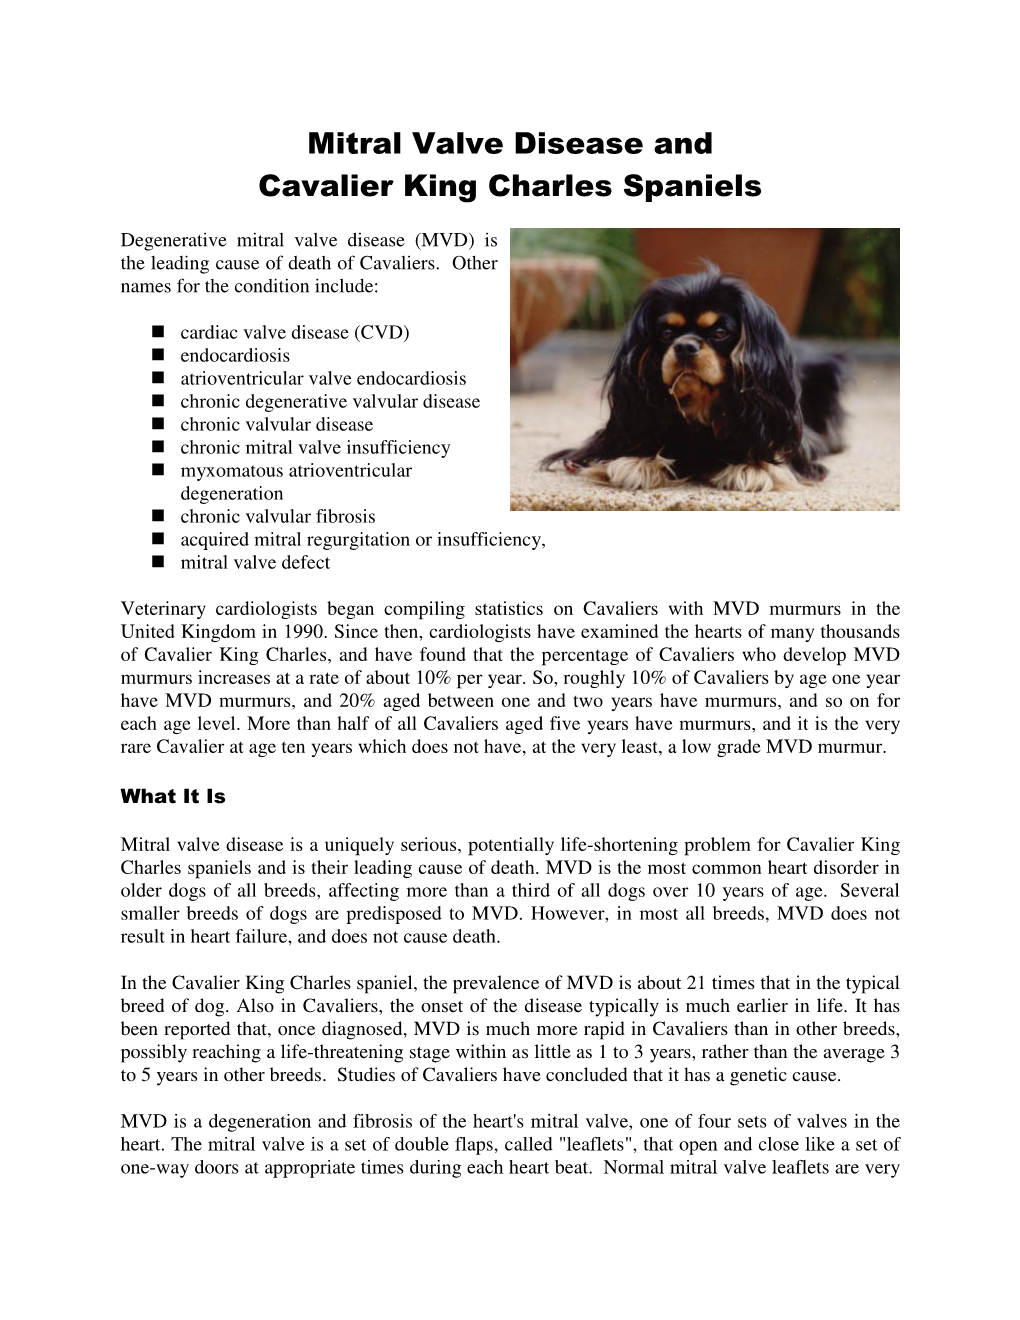 Mitral Valve Disease and Cavalier King Charles Spaniels